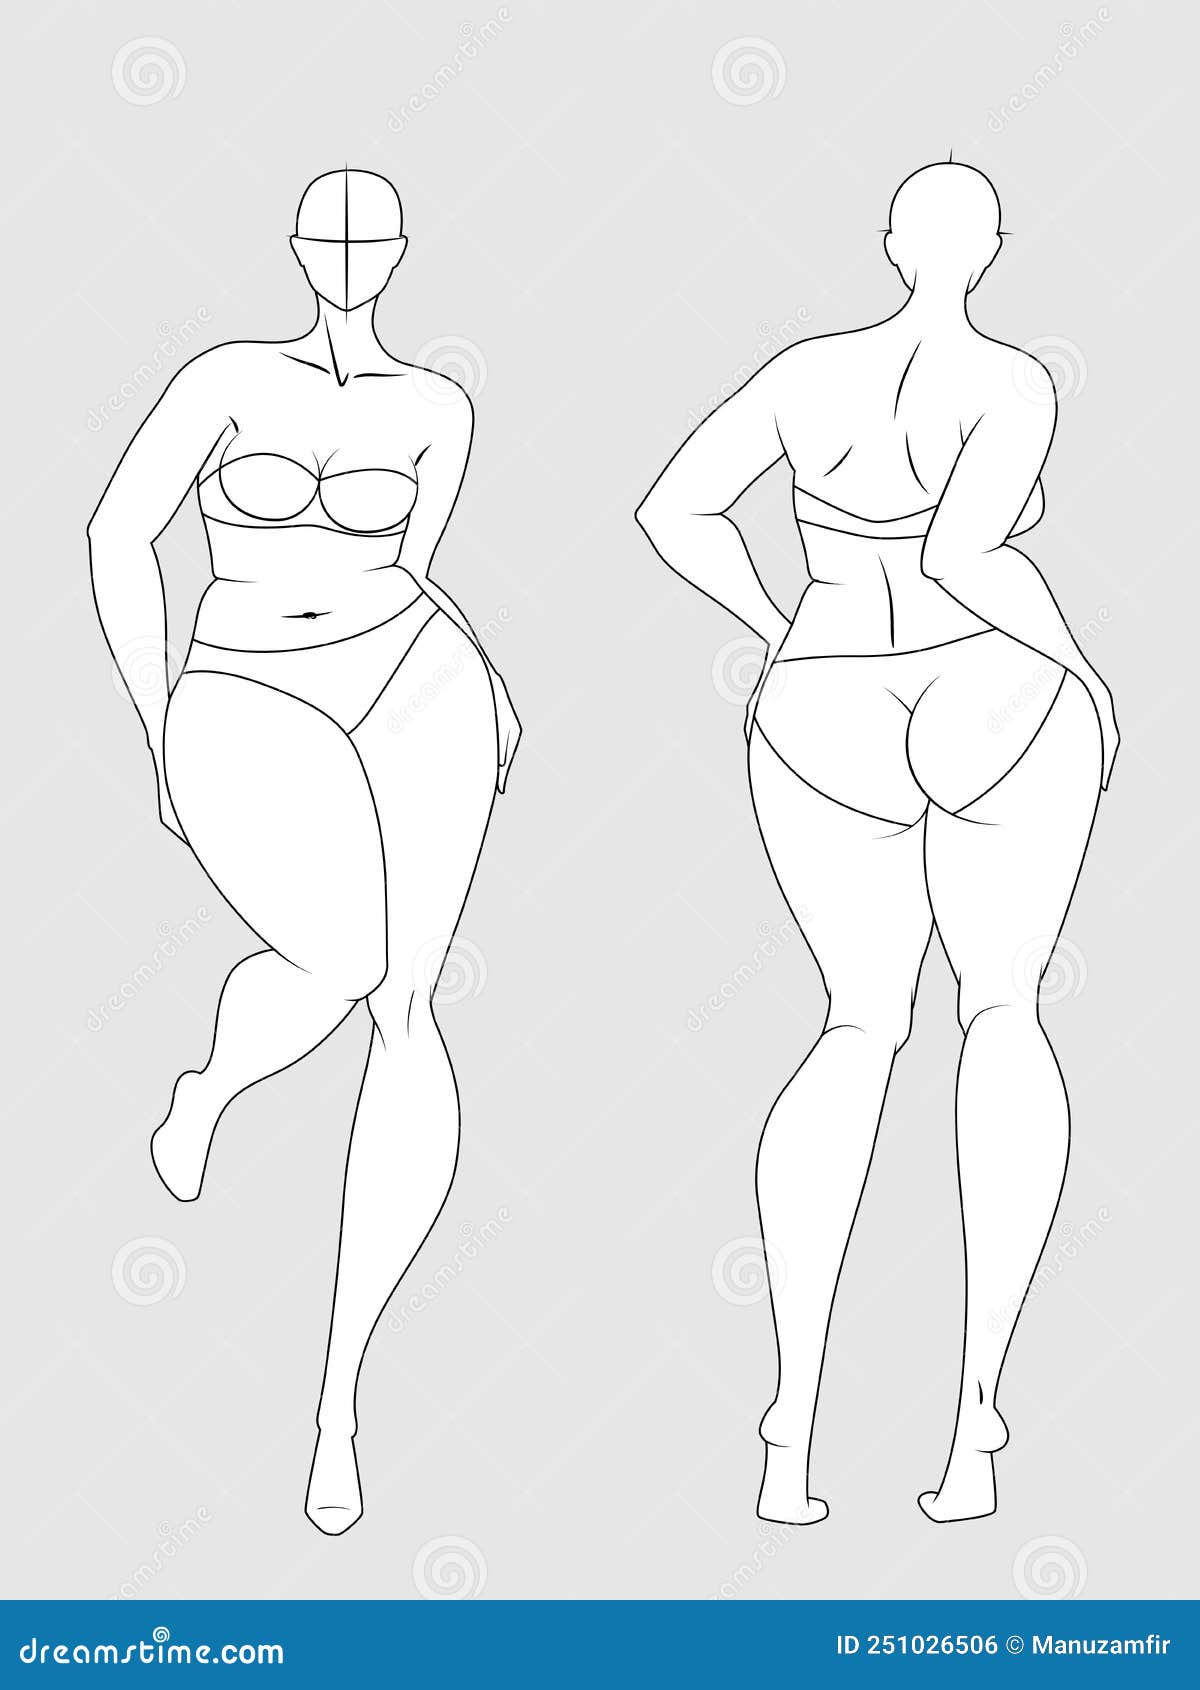 plus size fashion figure templates